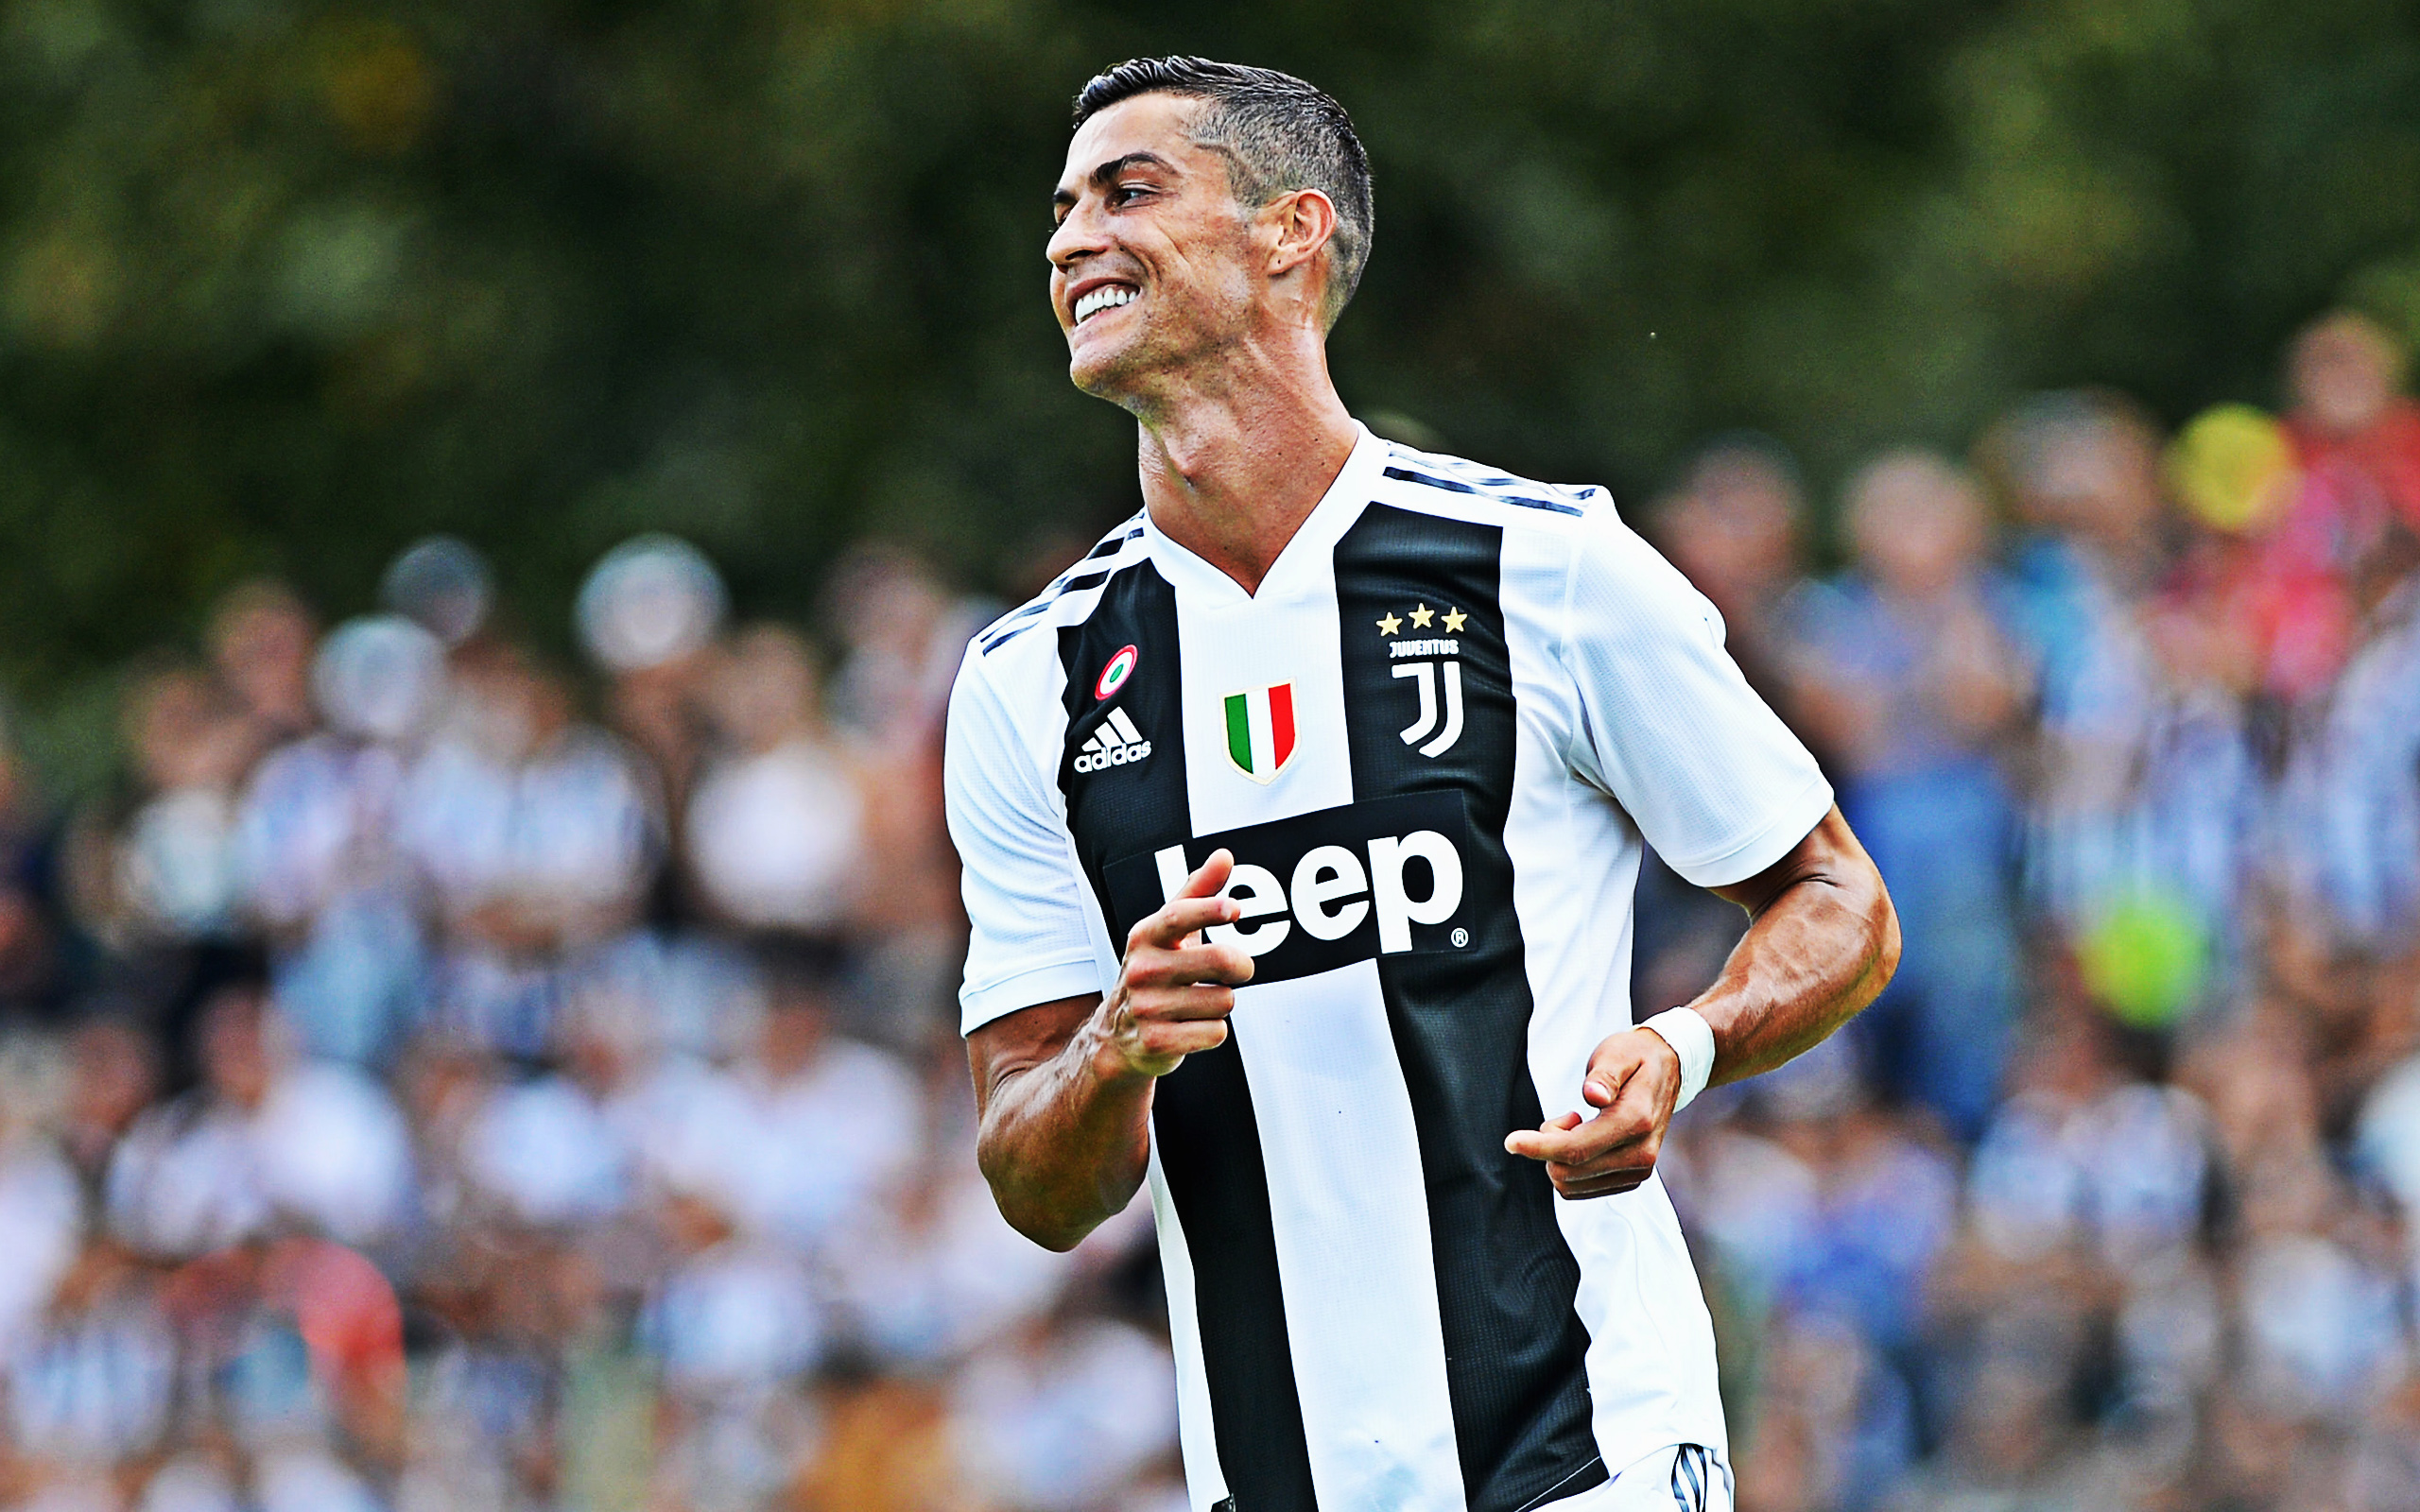 Descarga gratuita de fondo de pantalla para móvil de Fútbol, Cristiano Ronaldo, Deporte, Portugués, Juventus F C.